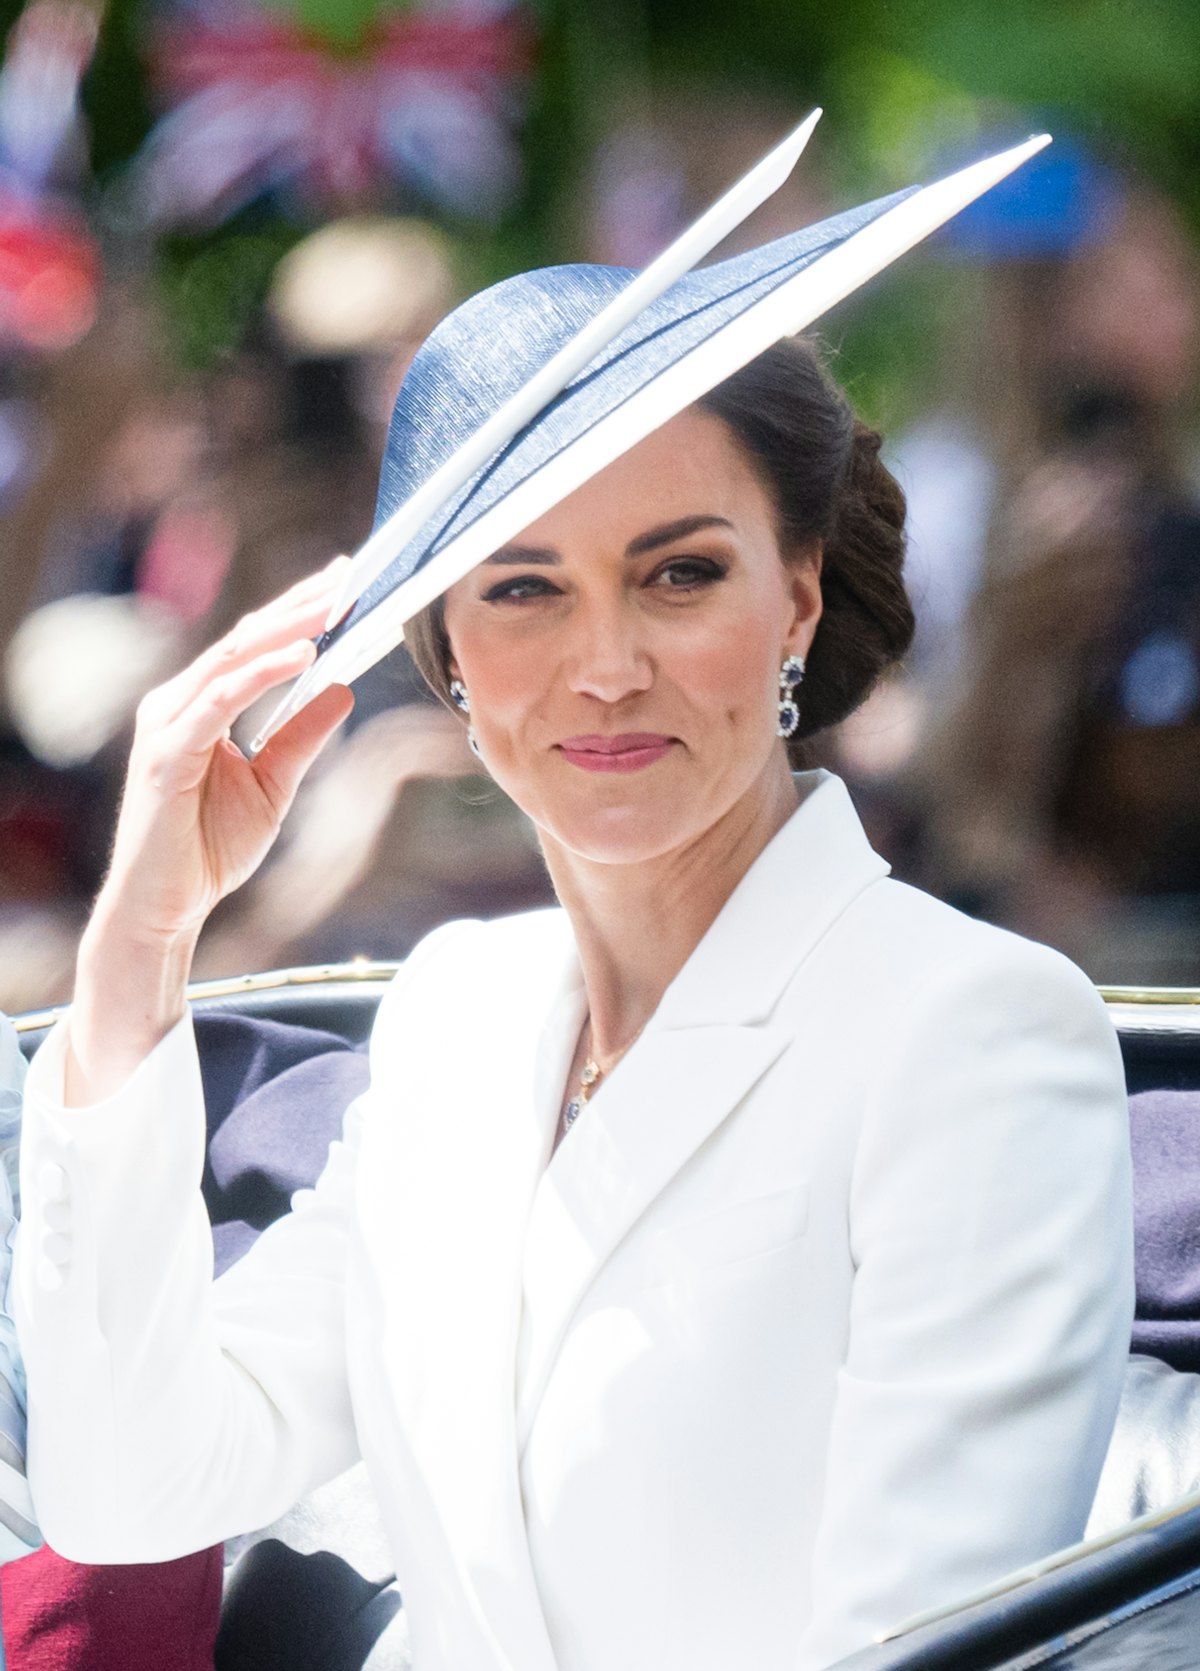 Kate Middleton's smoky brown eye makeup stunned at Queen Elizabeth's Platinum Jubilee in London.